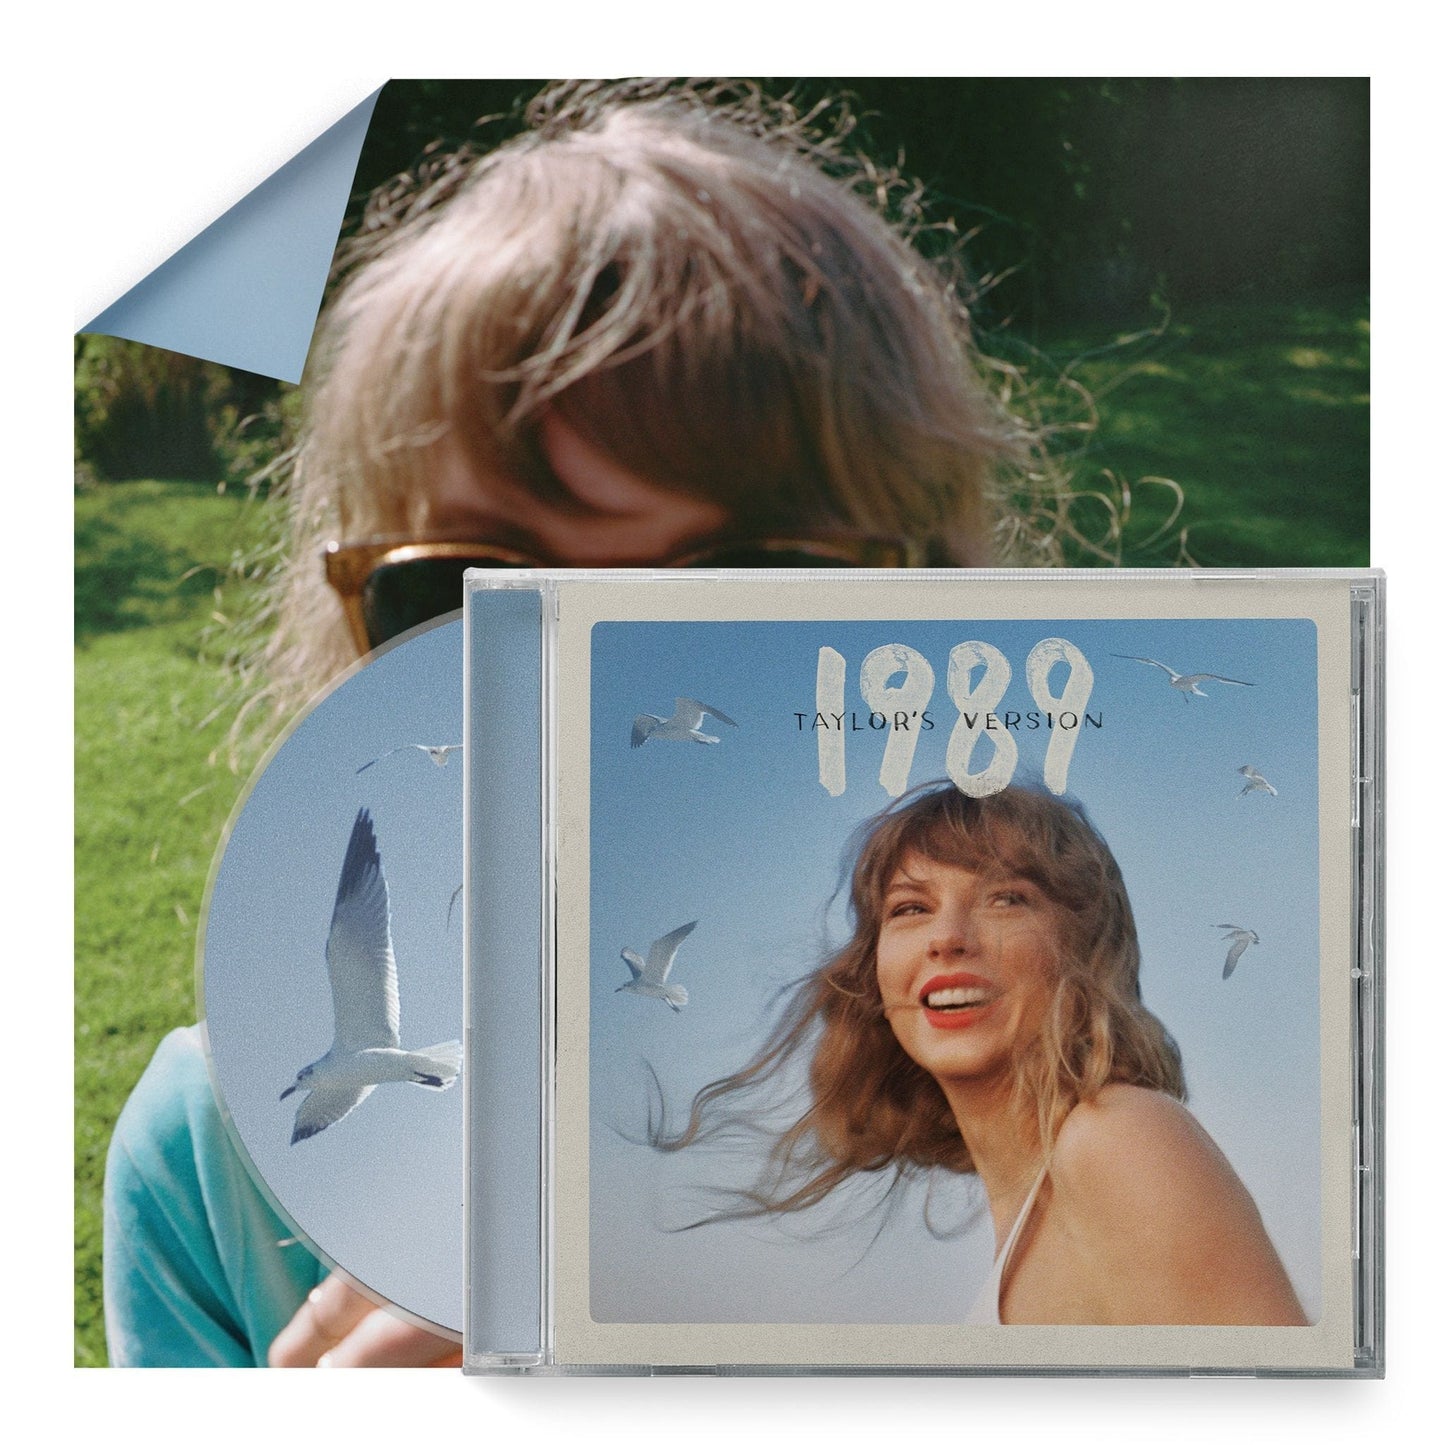 1989 (Taylor's Version) [CD]